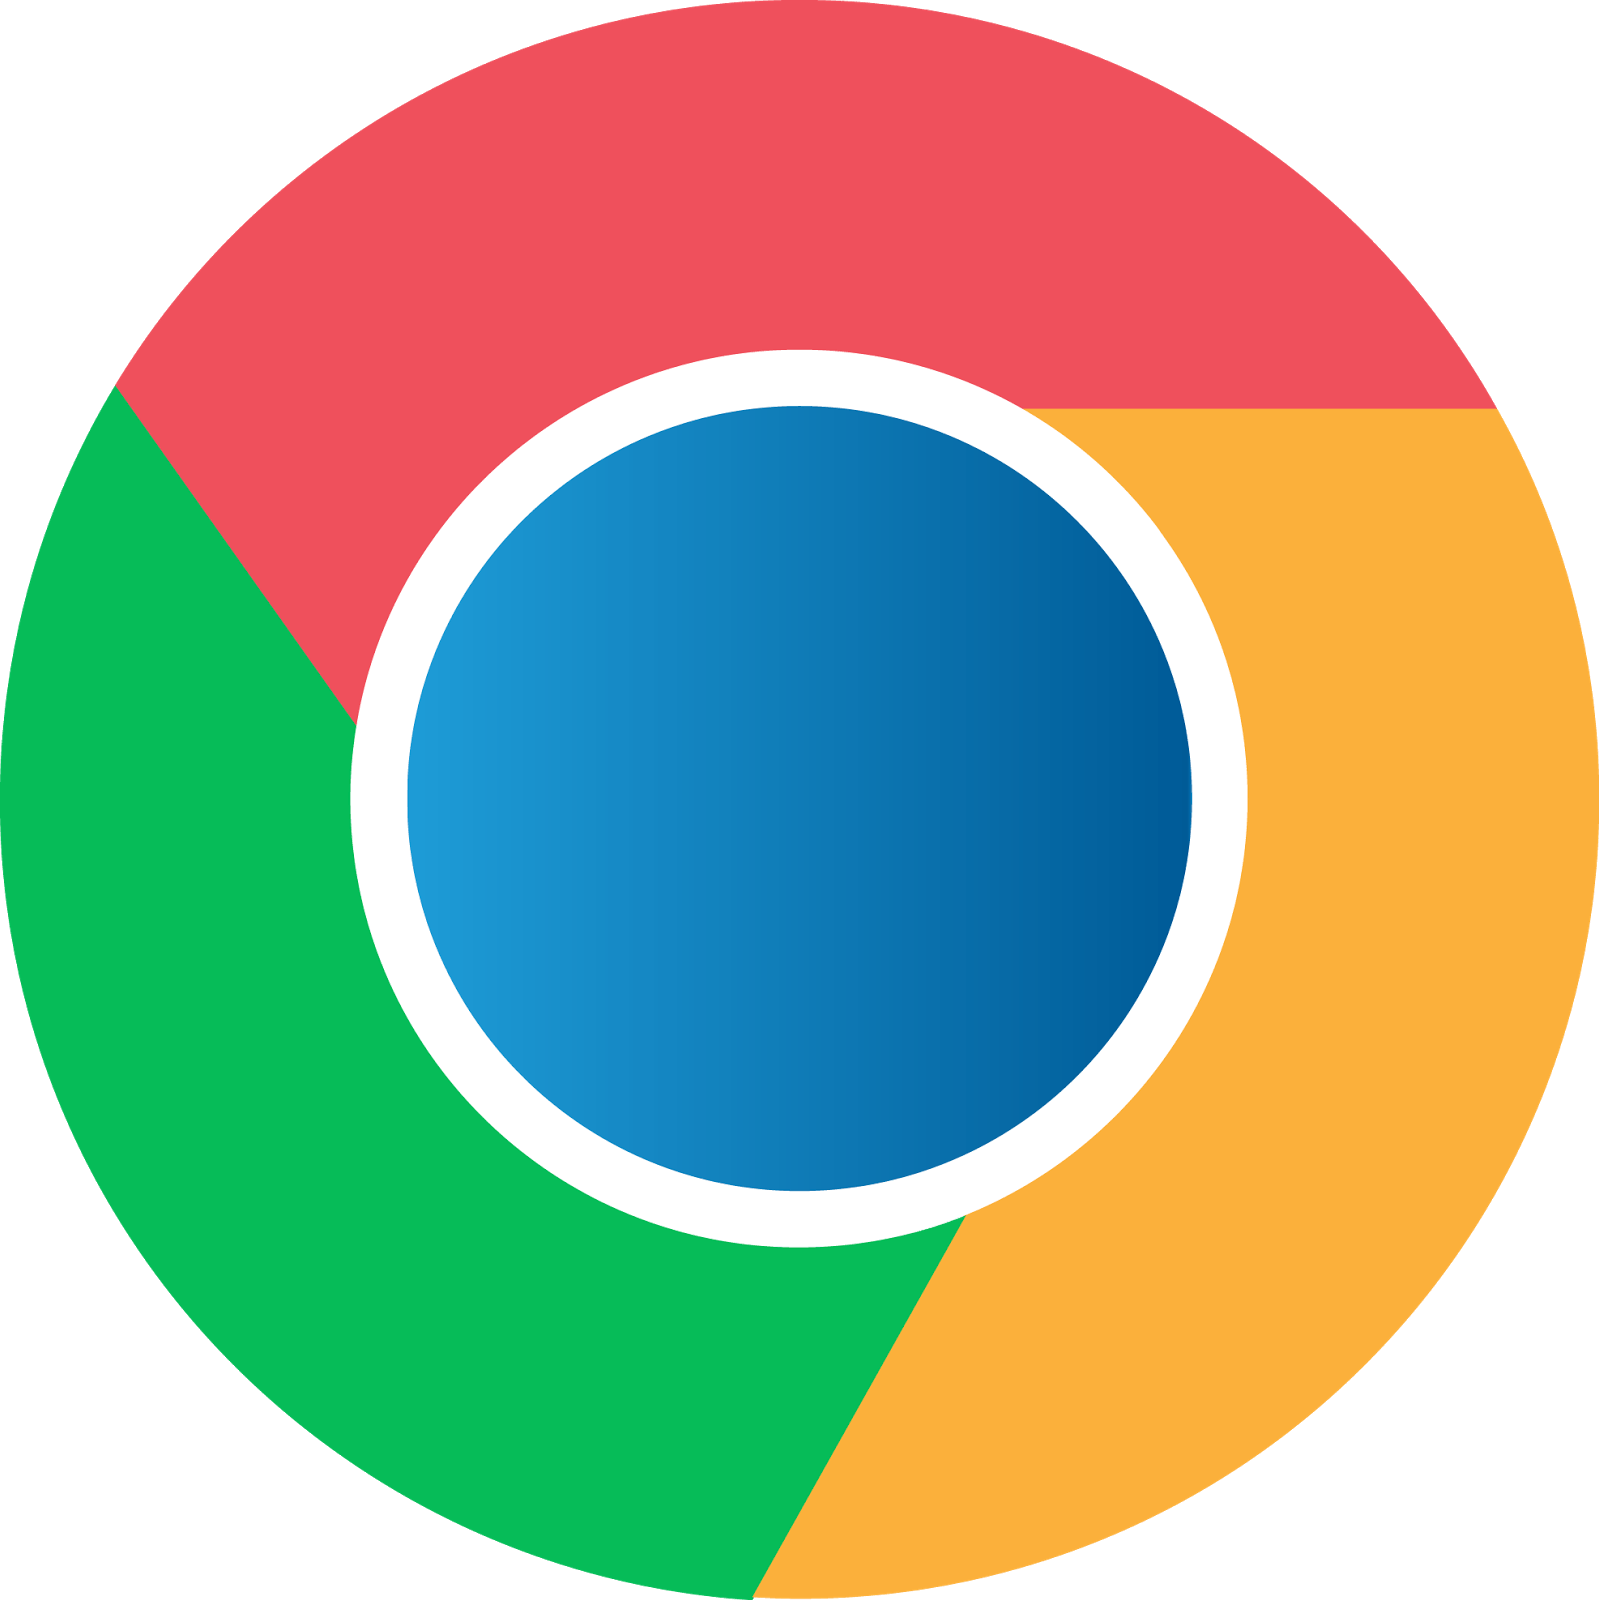 Chrome Logo - Chrome logo PNG images free download